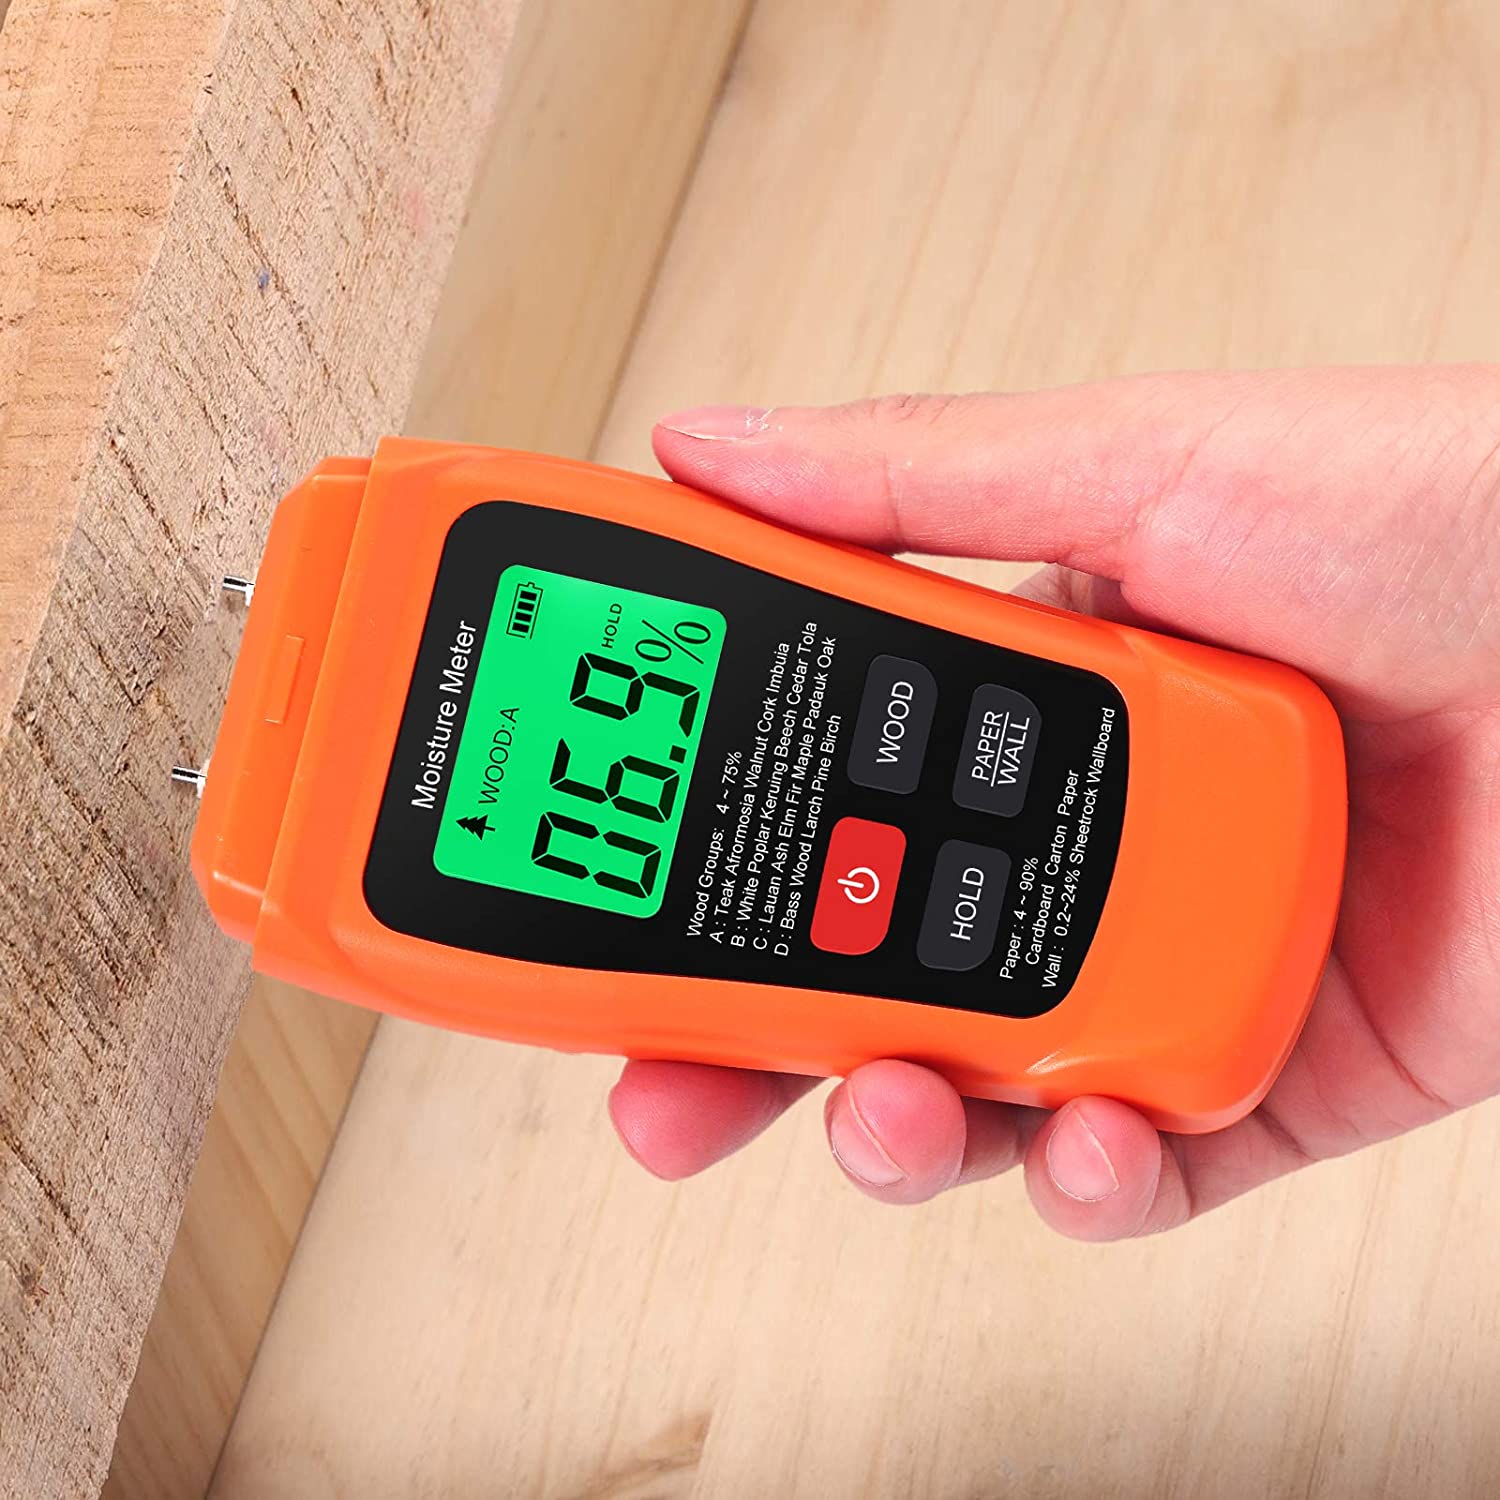 Proster Meter 0-90% Damp Meter Wood Wall Paper Moisture Tester Detector Humidity Measuring Orange